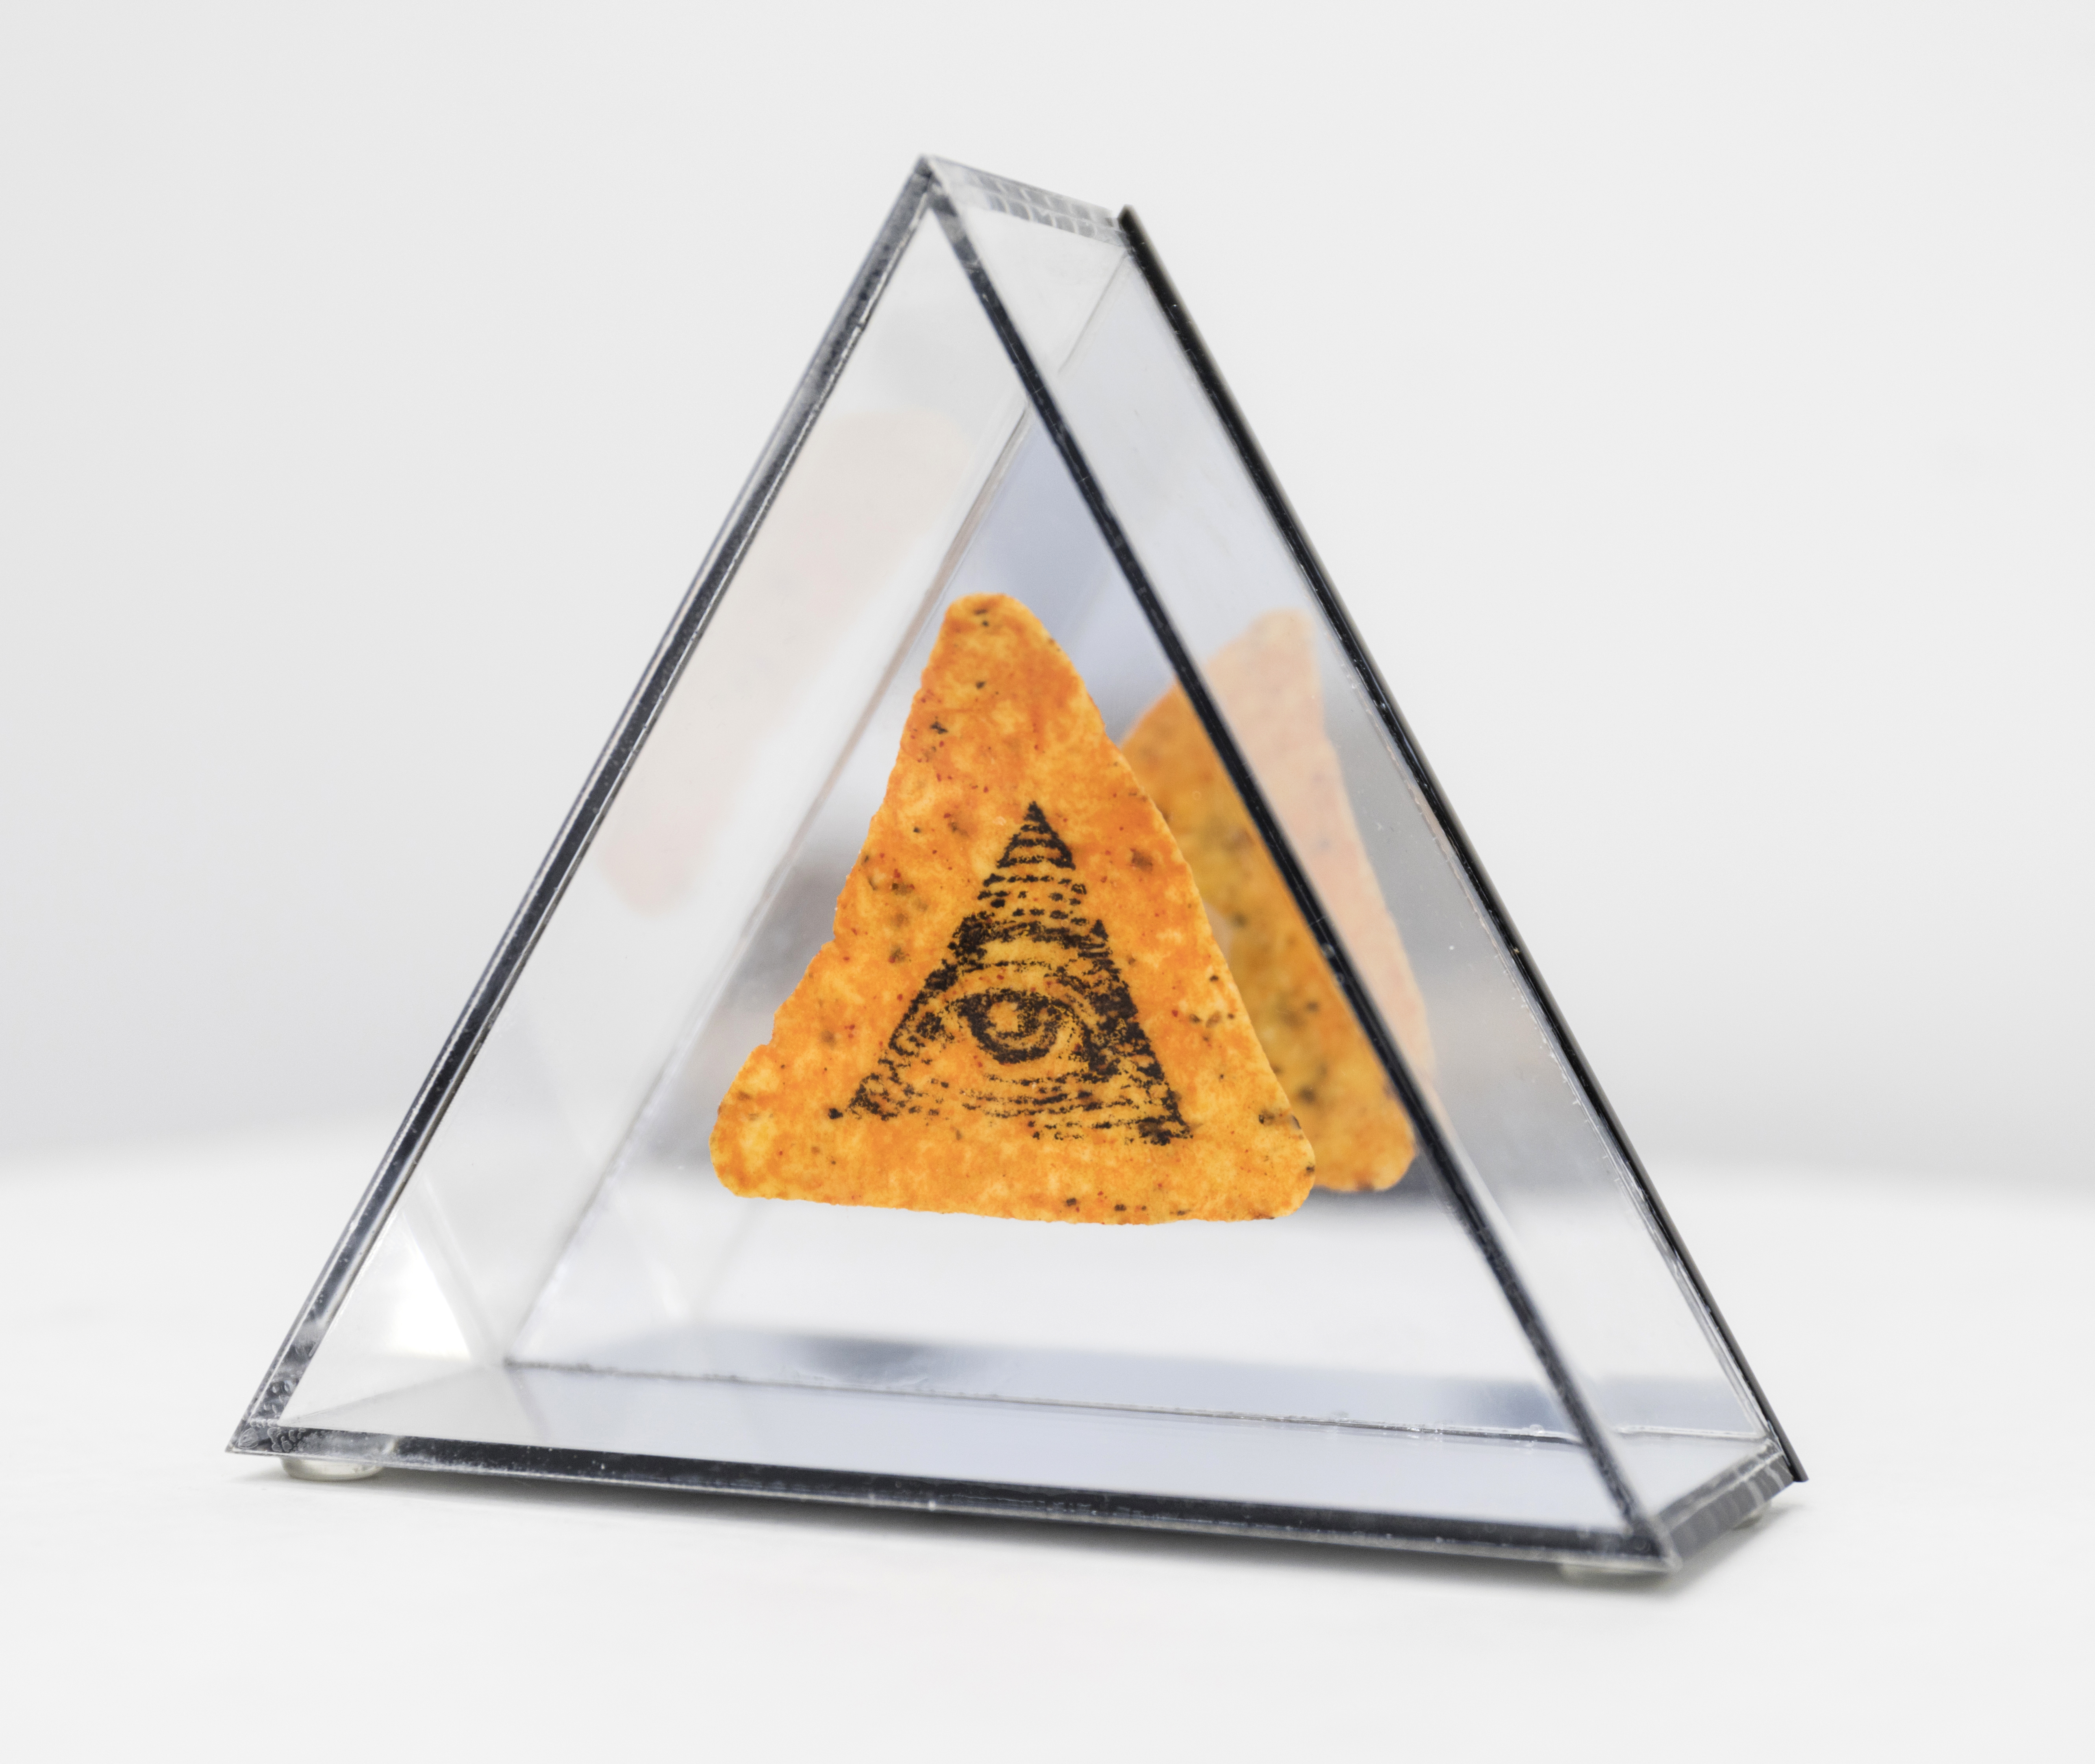 Illuminati Laser-Etched Dorito / Chip, Custom Plexiglass Enclosure, Open Edition,
2017